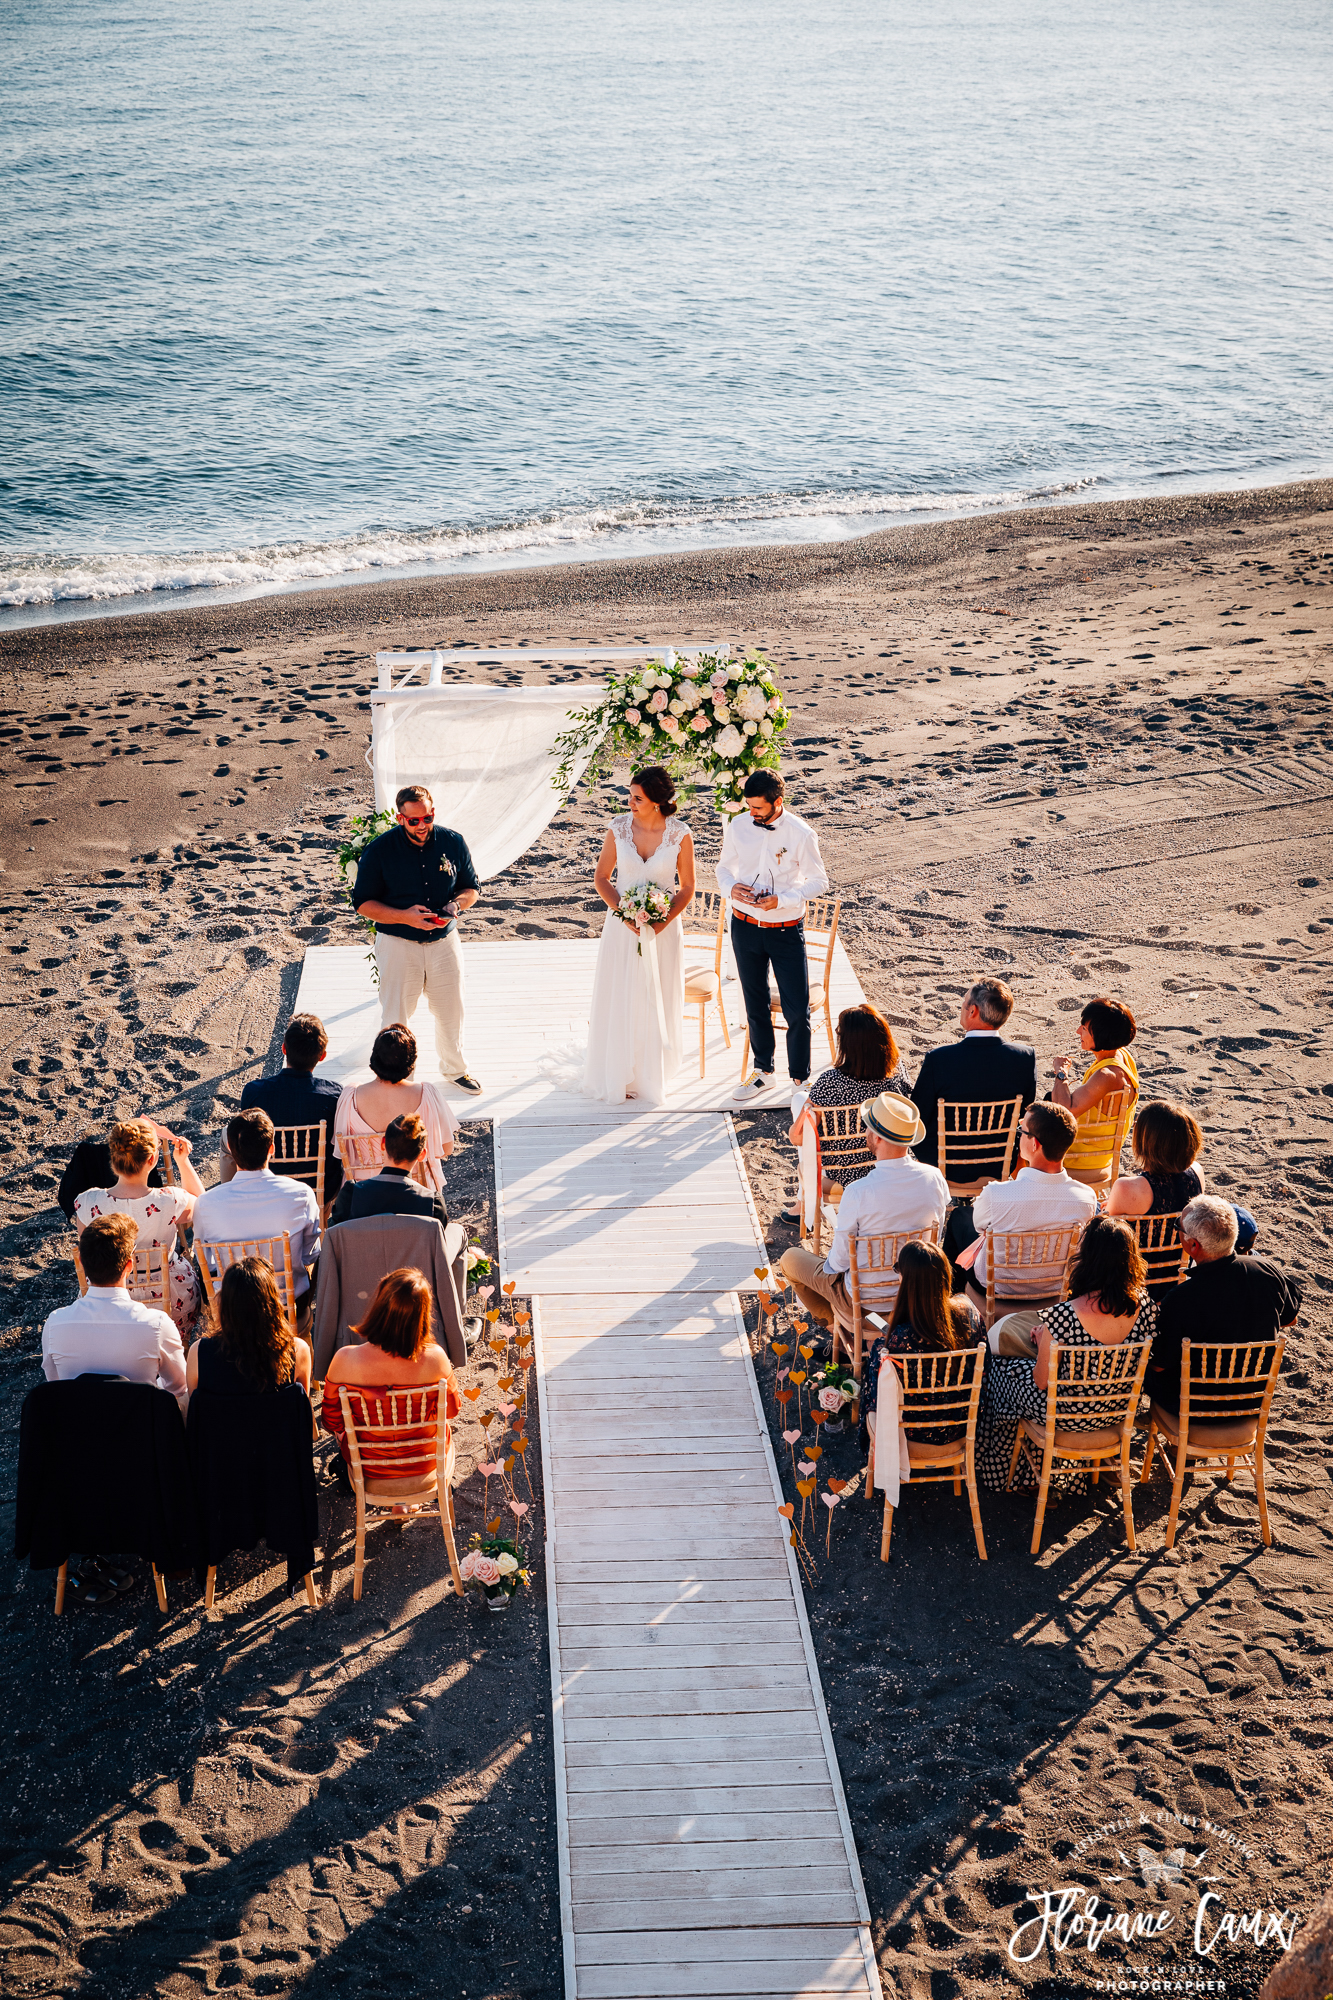 mariage-santorin-grece-ceremonie-laique-plage (8)